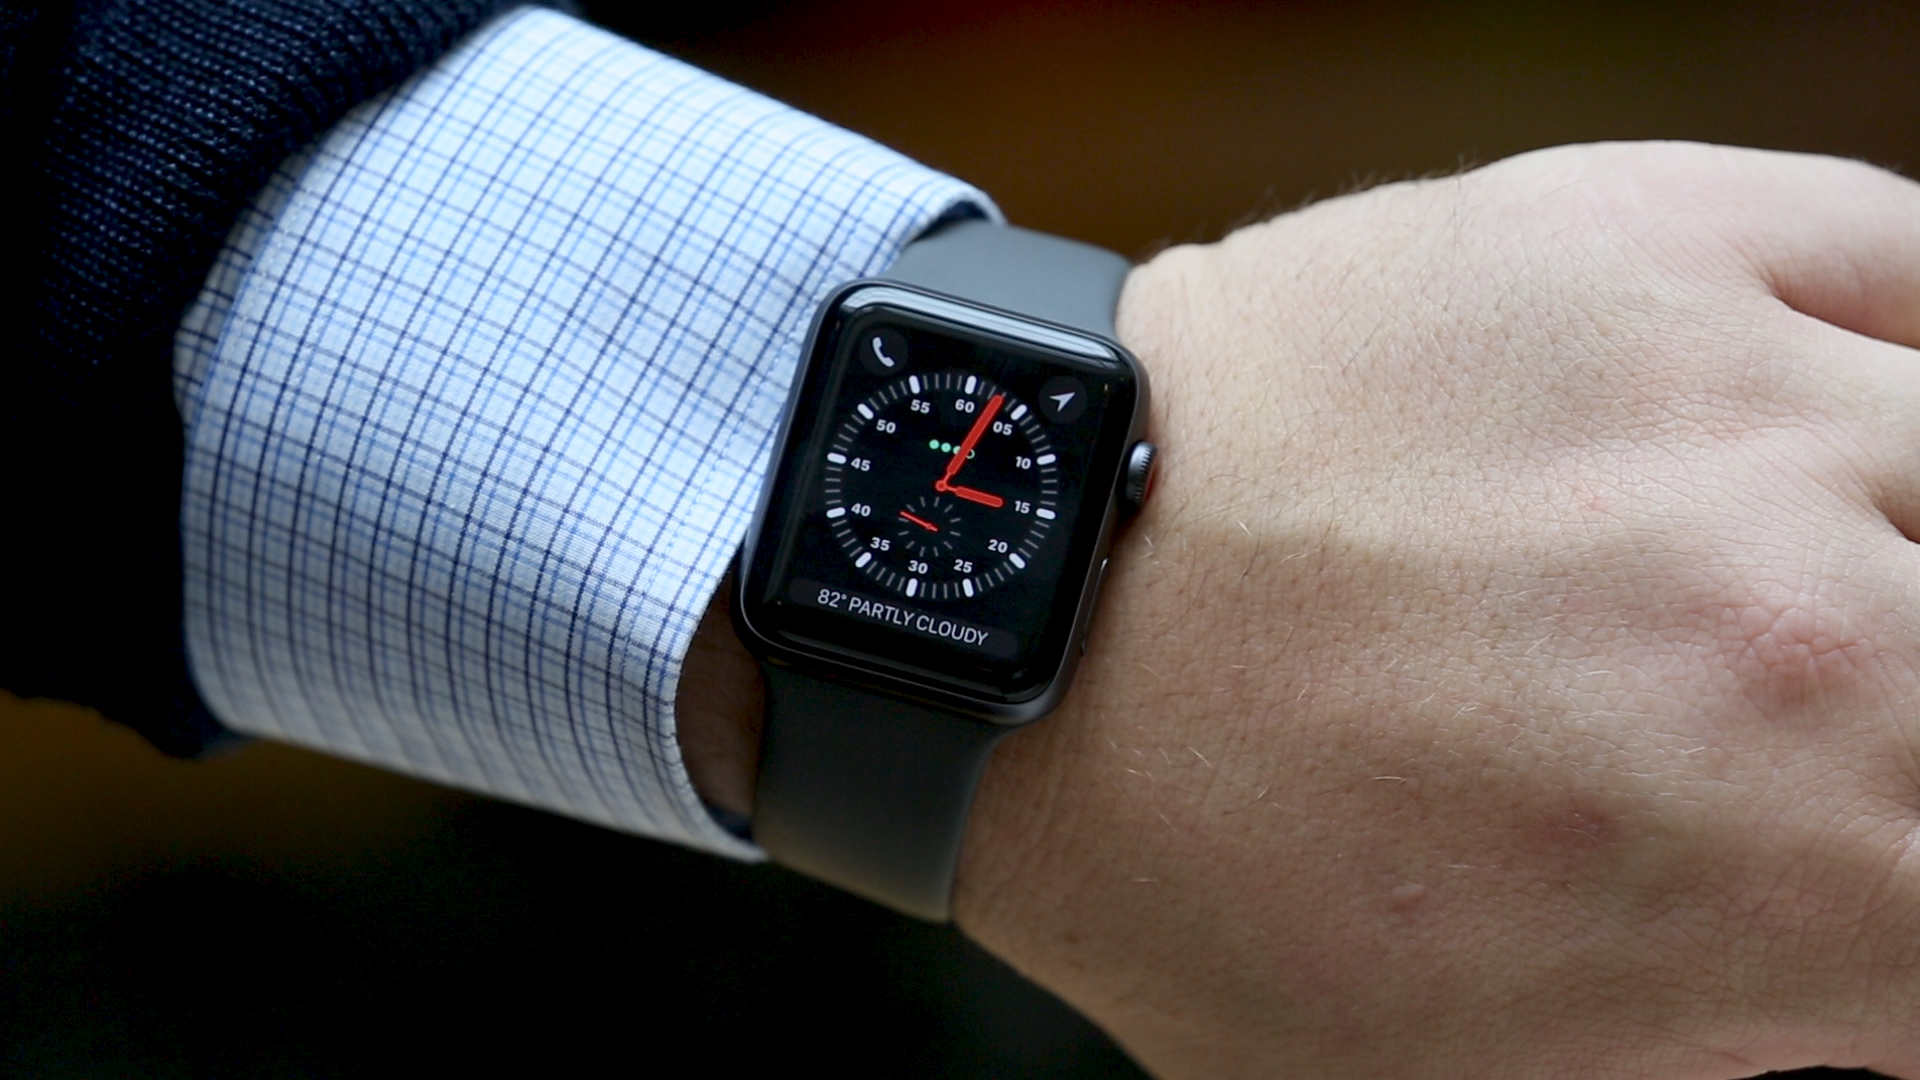 Apple watch 23. Часы с трансфлективным дисплеем. Смарт часы с костюмом. Apple watch 3 Esim. Apple watch на руке.